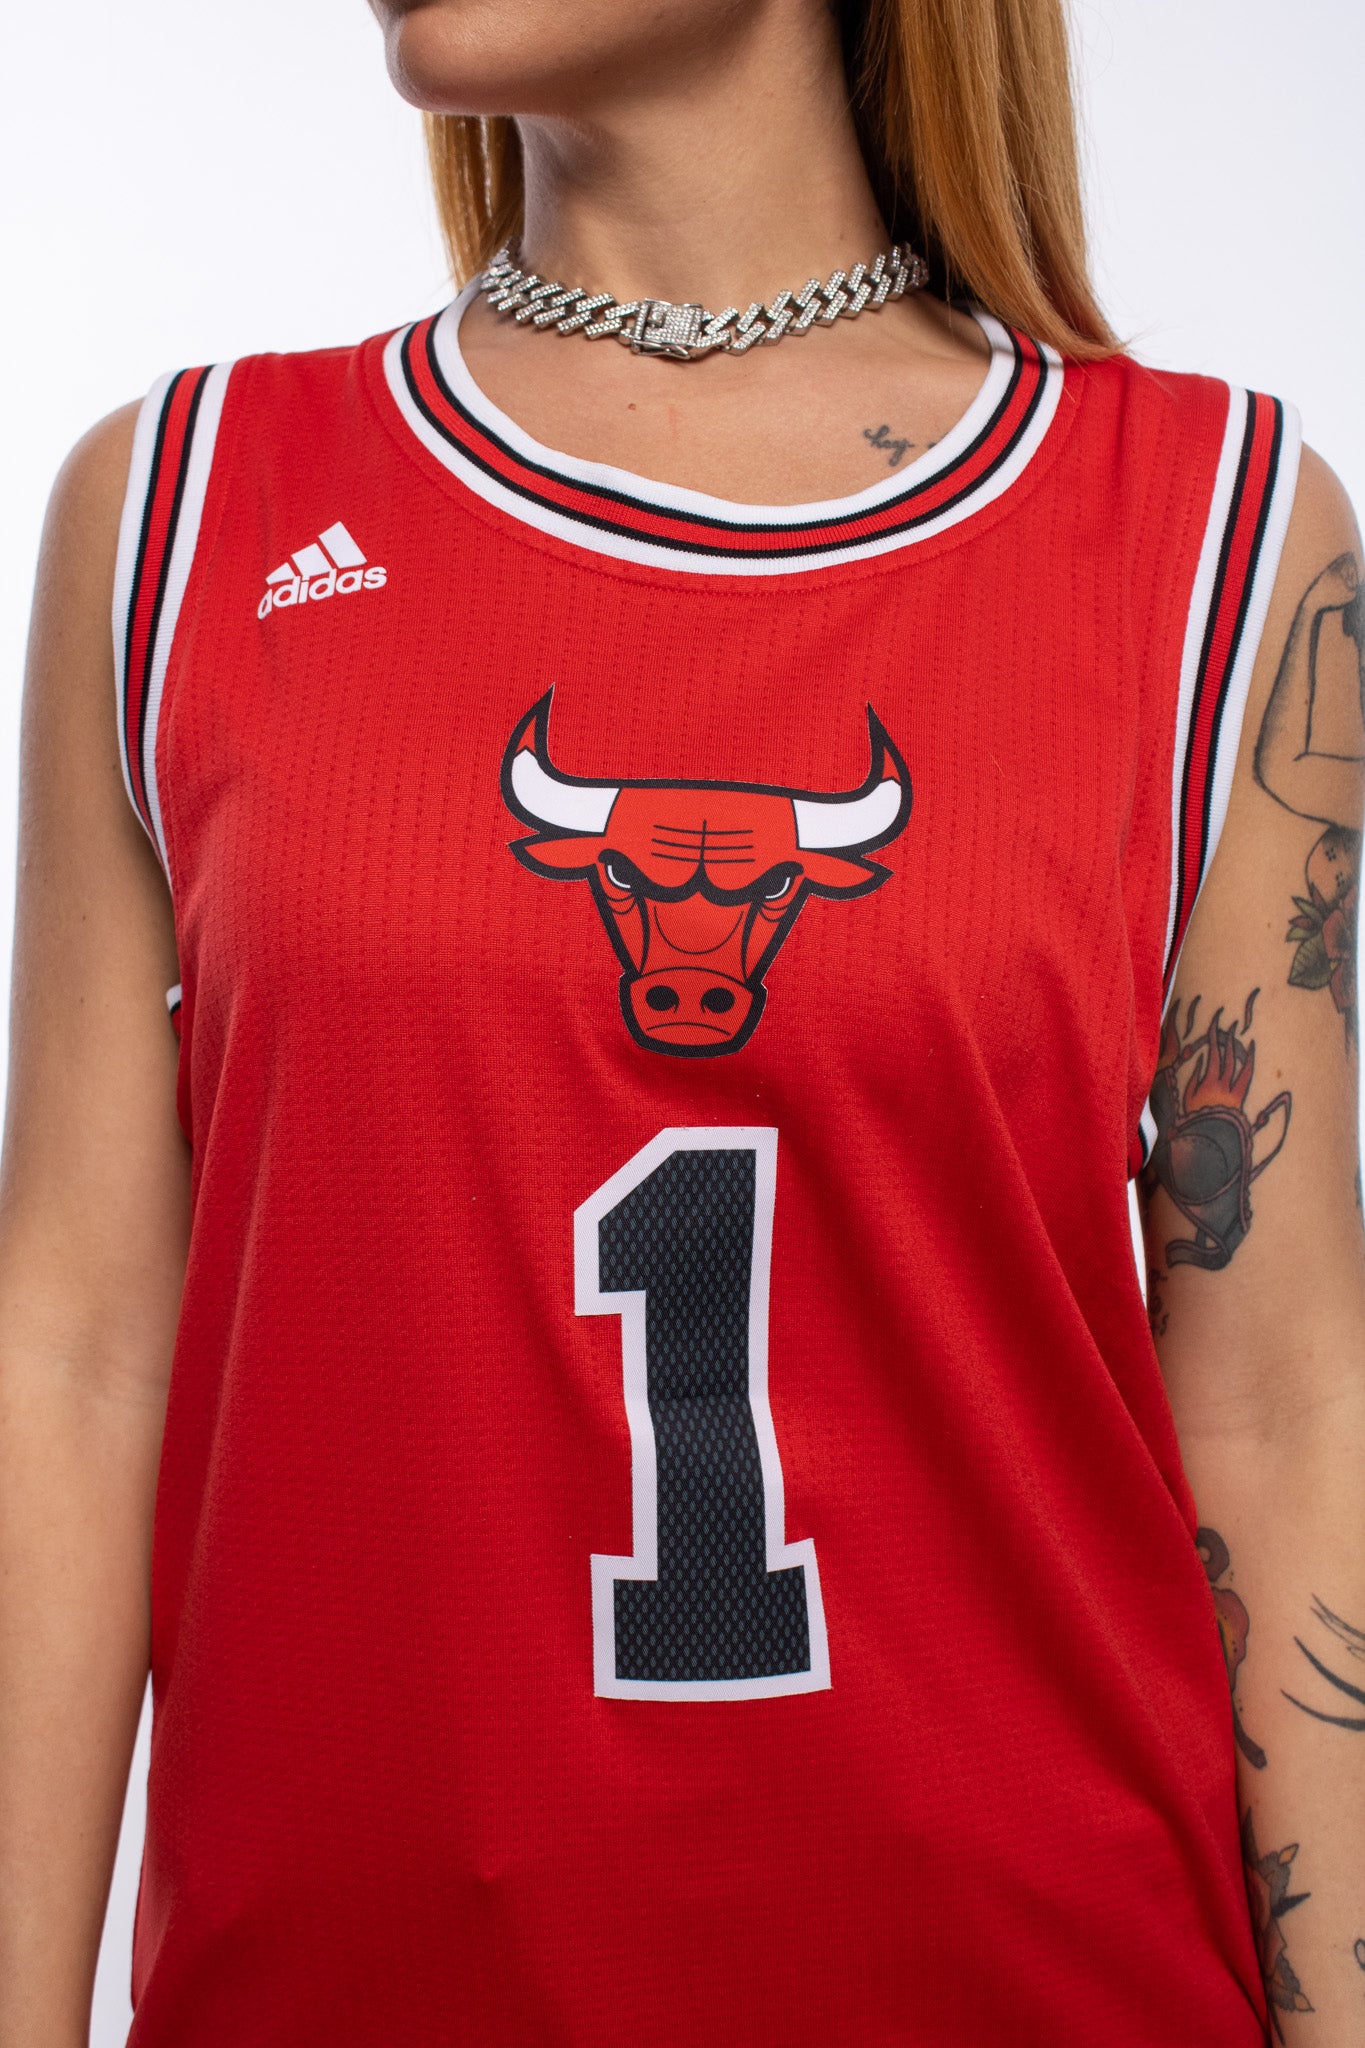 Adidas NBA Chicago Bulls Swingman Jersey